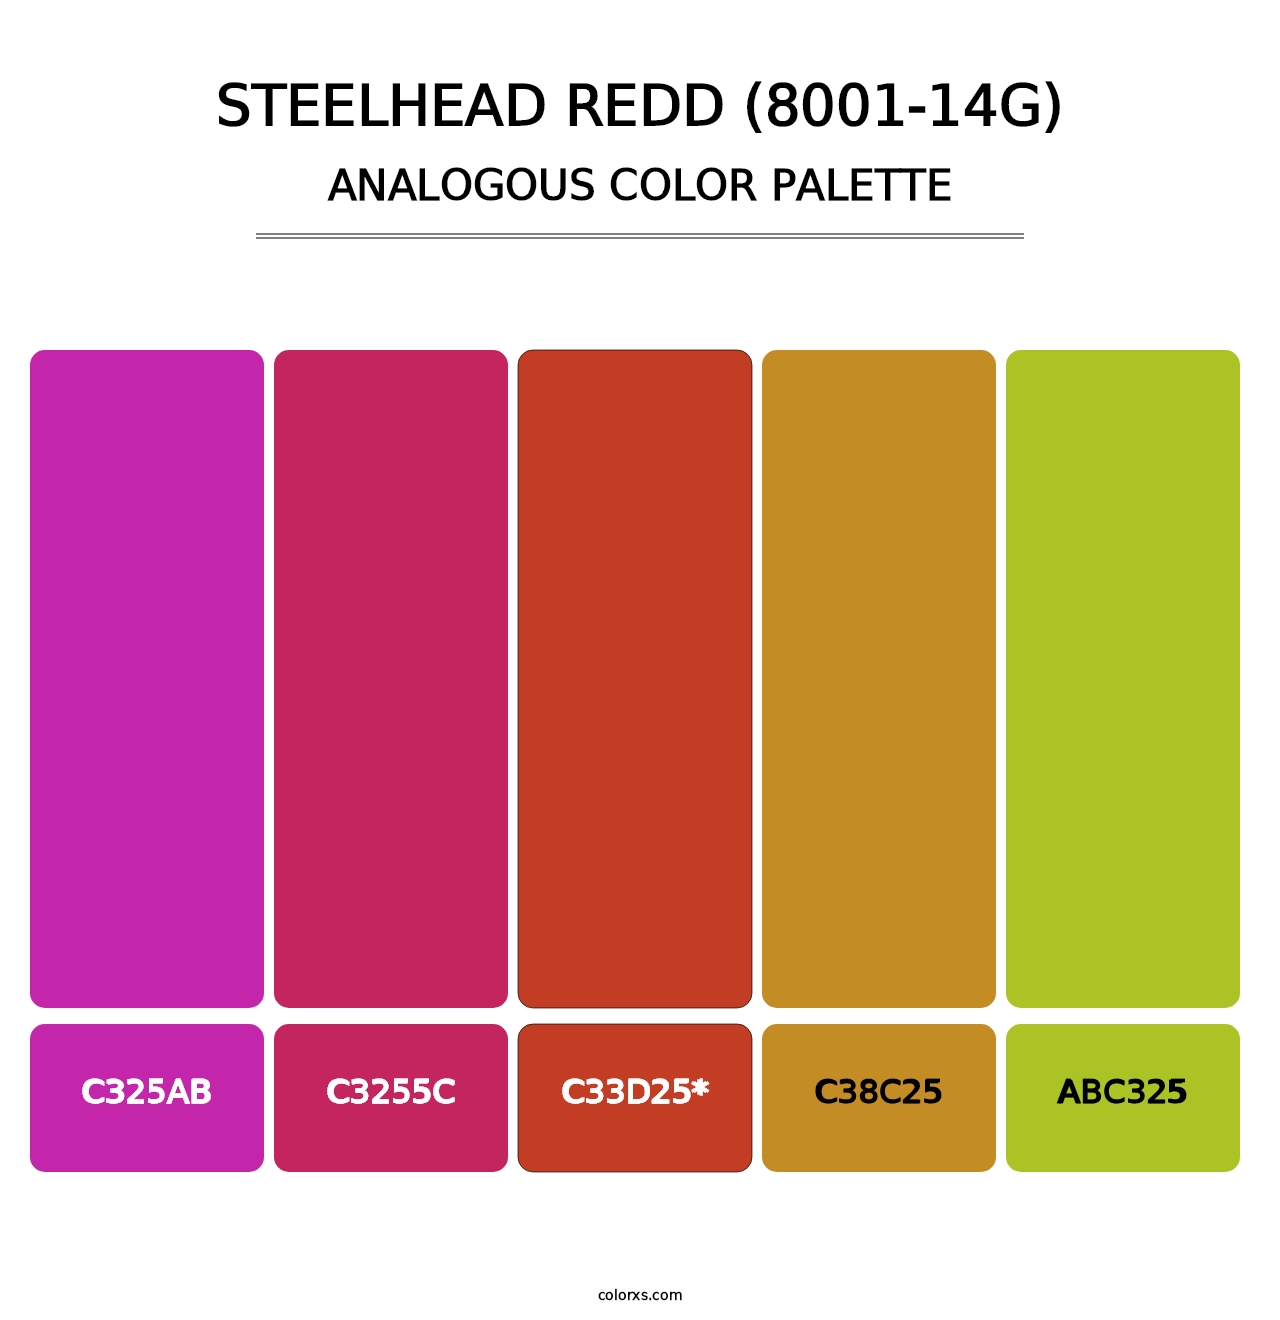 Steelhead Redd (8001-14G) - Analogous Color Palette